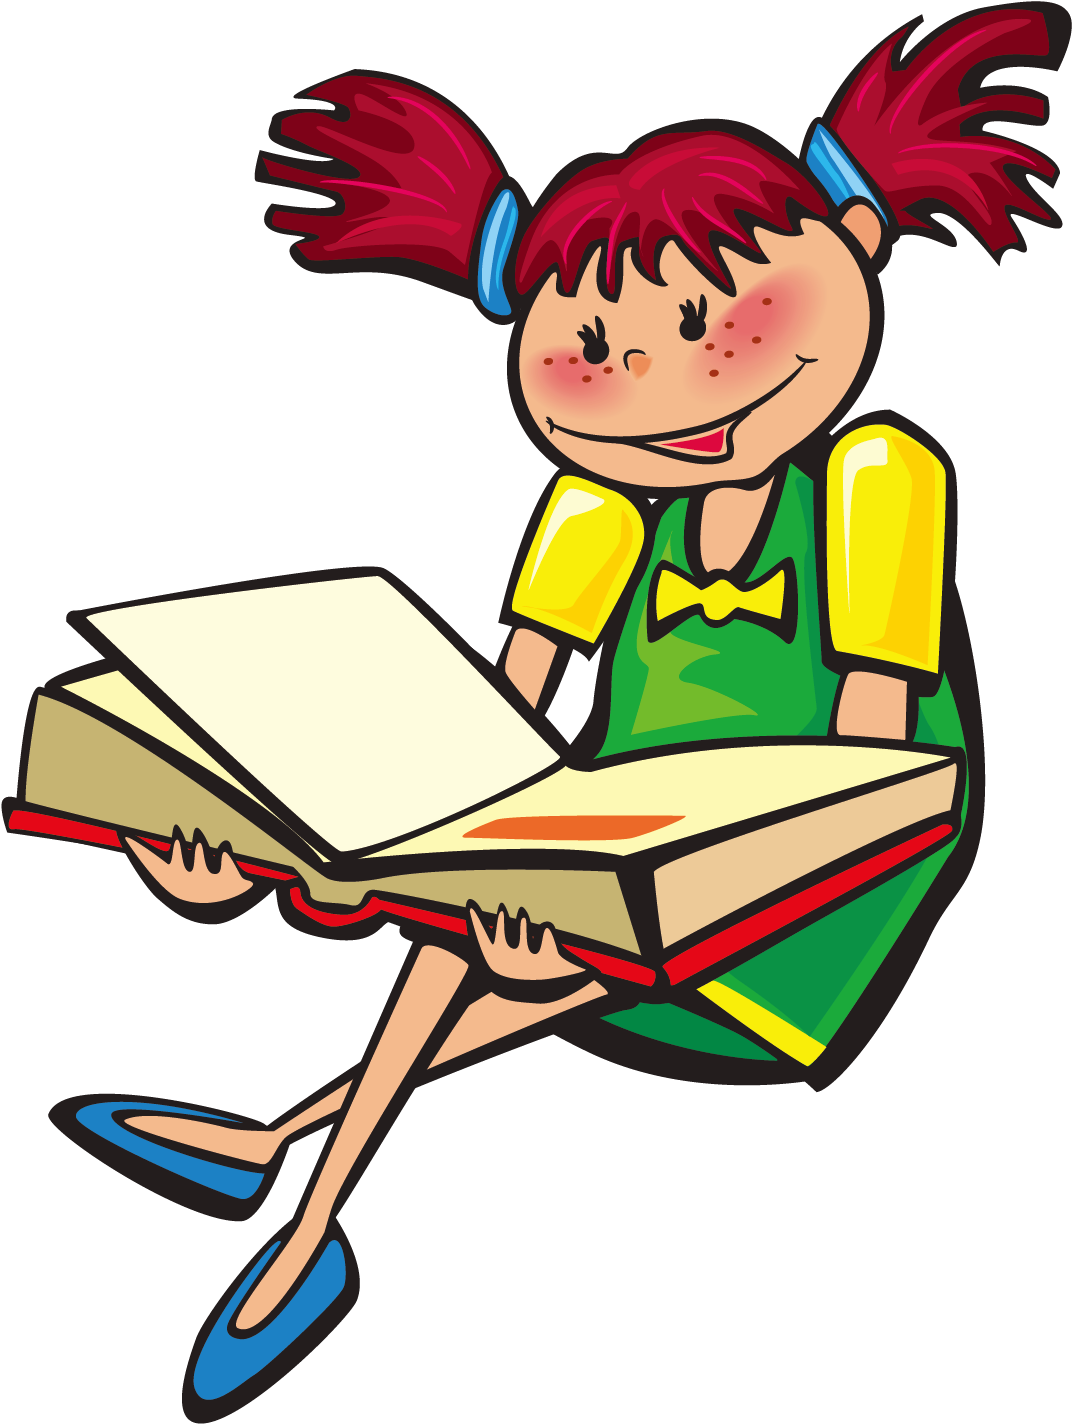 Student Study Skills Homework Clip Art - Reading House: Blueprints For Building Better Readers (2362x2362)